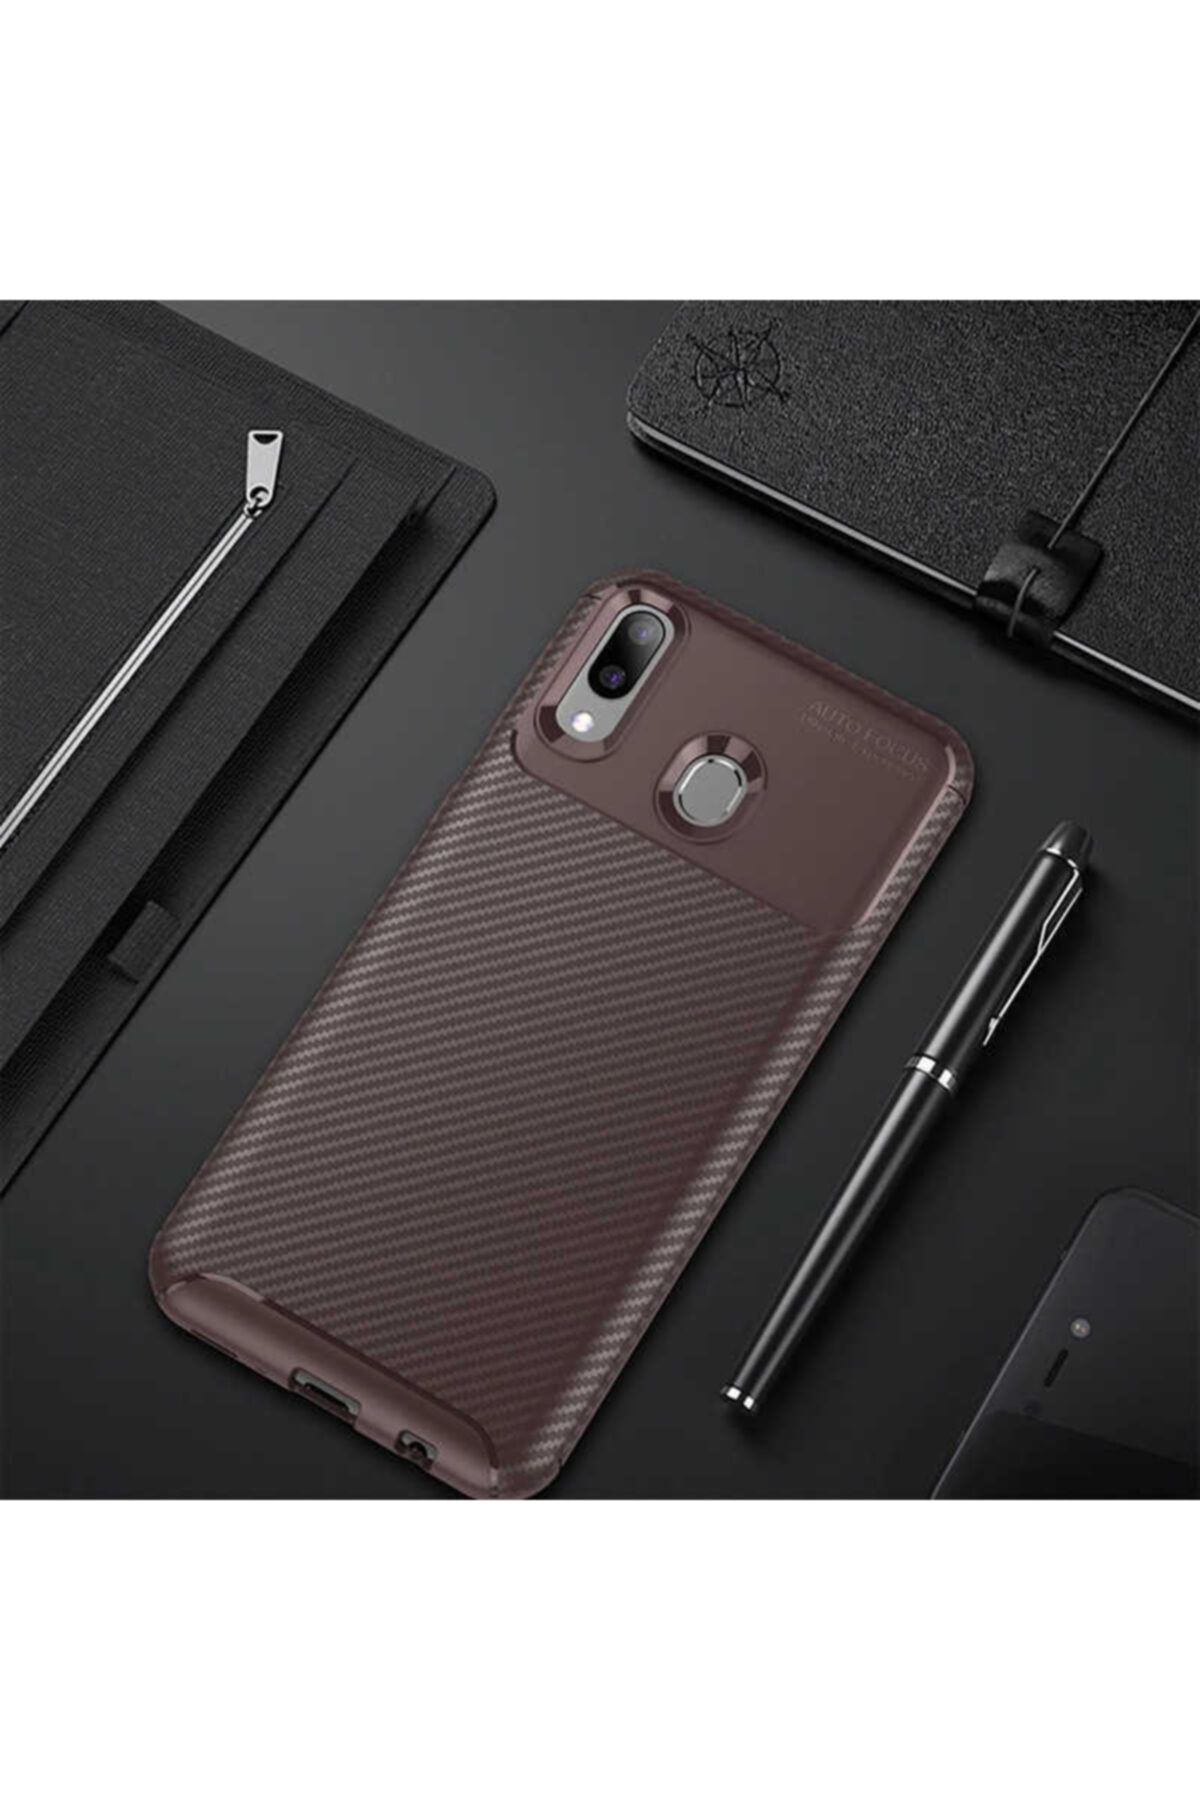 Nezih Case Huawei Y7 Prime 2019 Kamera Korumalı (carbon Tasarım) Silikon Kılıf Kahverengi